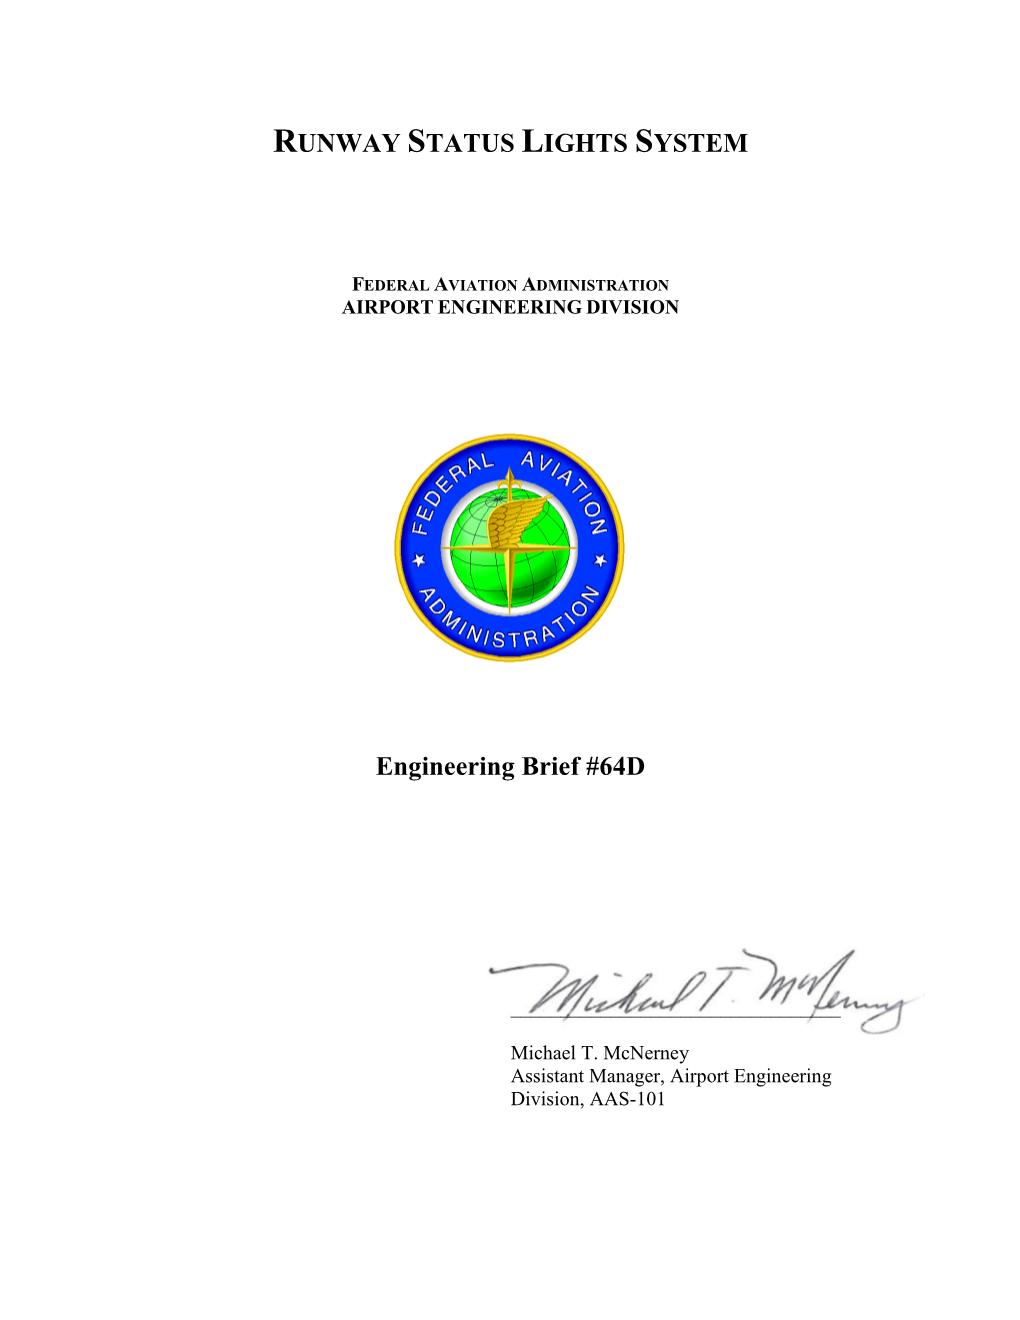 FAA Engineering Brief #64D, Runway Status Light System, 9 May 2011